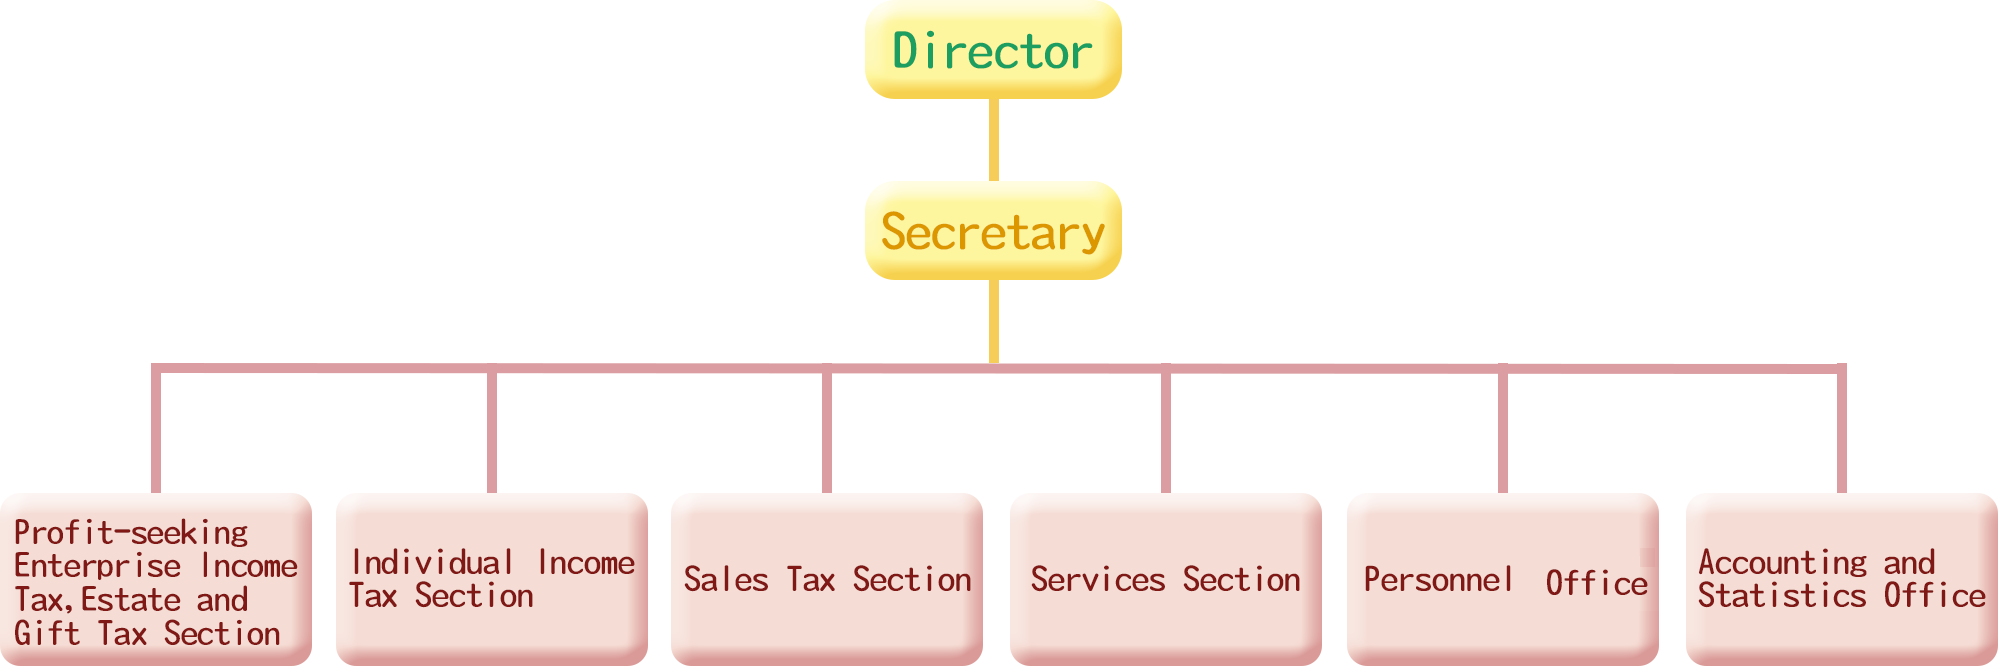 Organization Structure of Nantou Branch. png